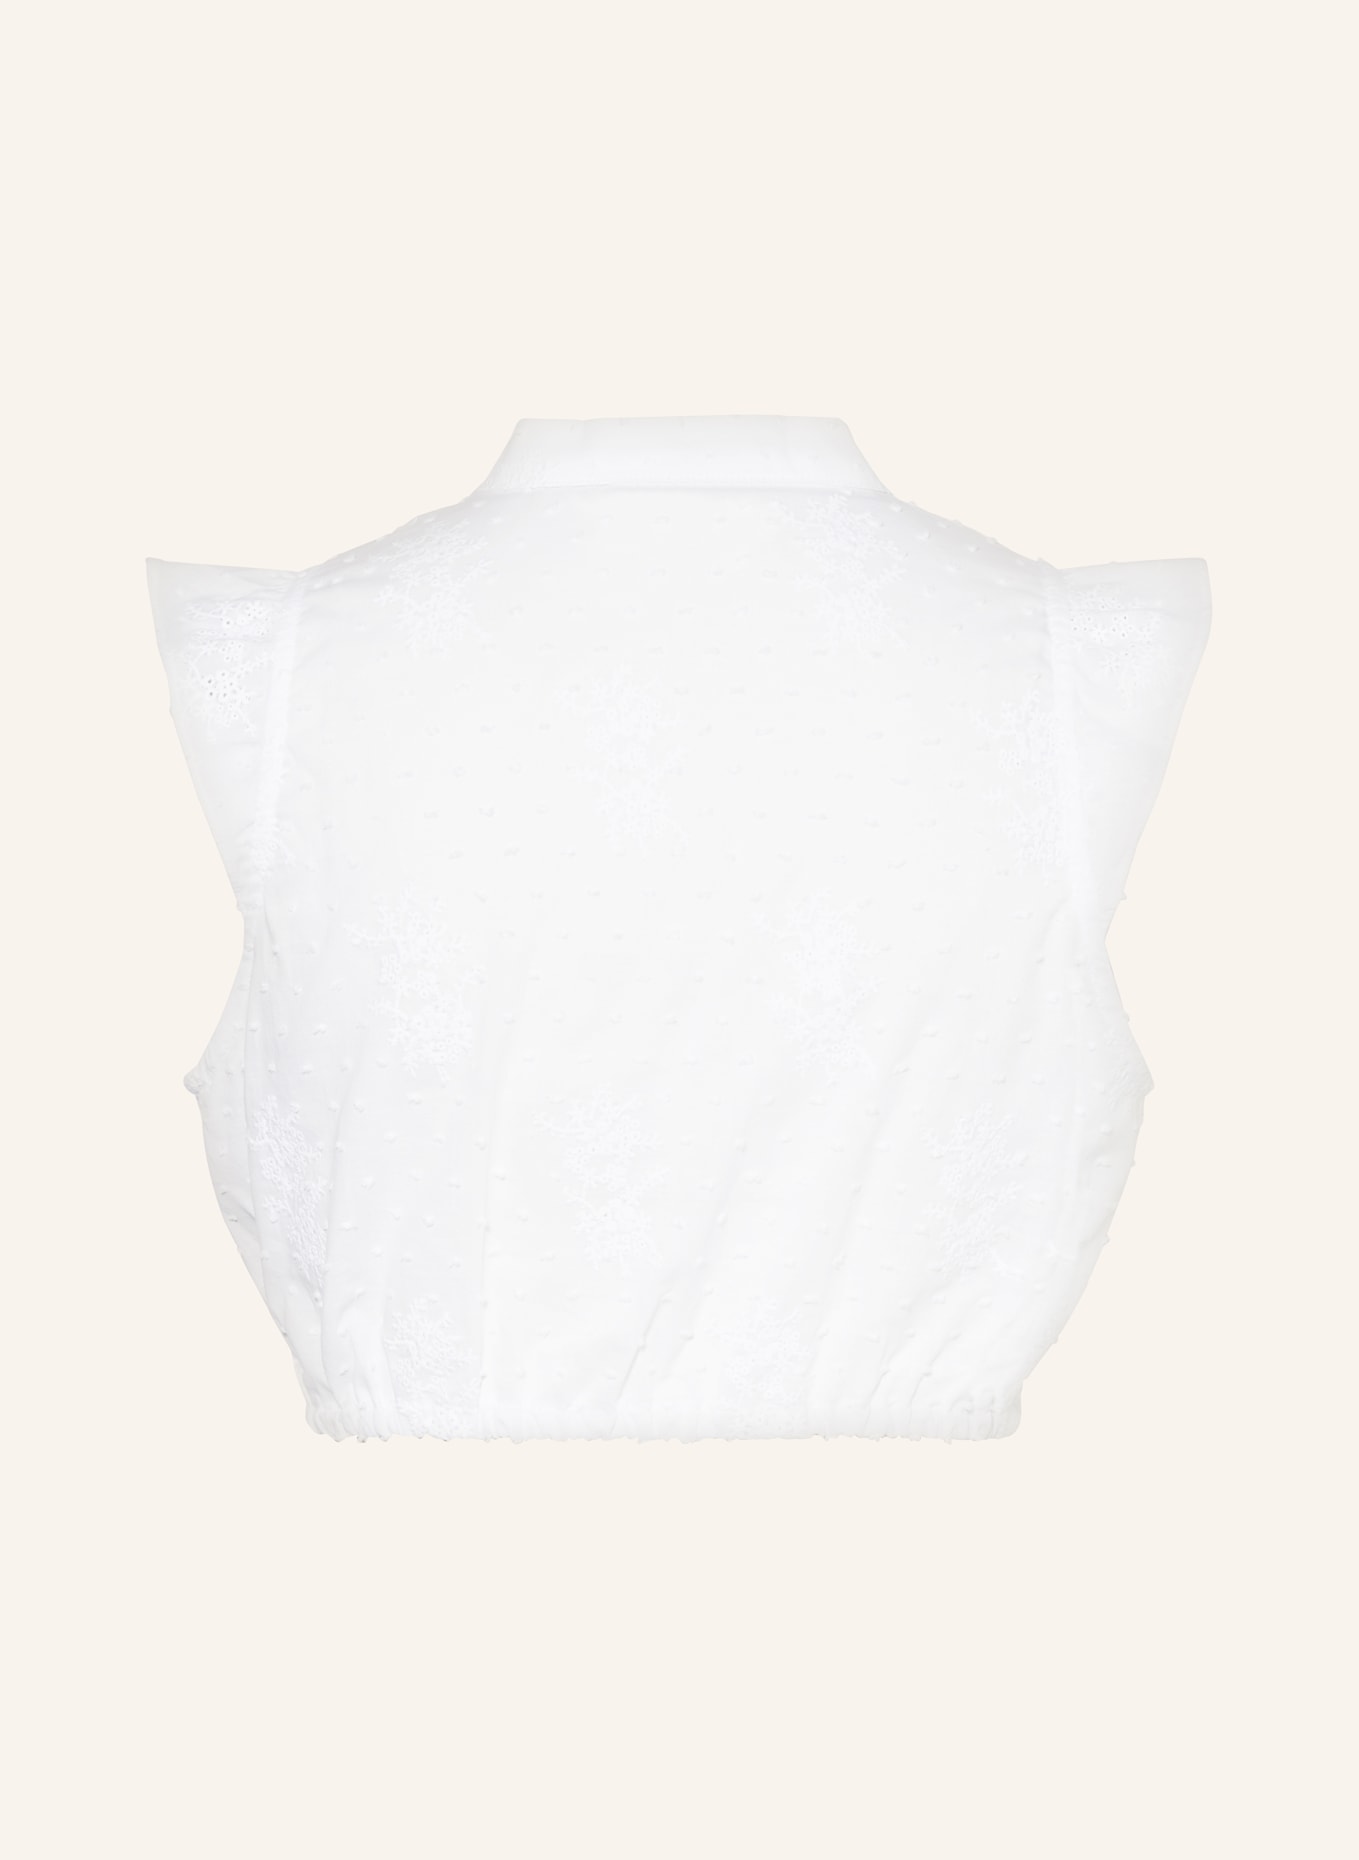 BERWIN & WOLFF Dirndl blouse, Color: WHITE (Image 2)